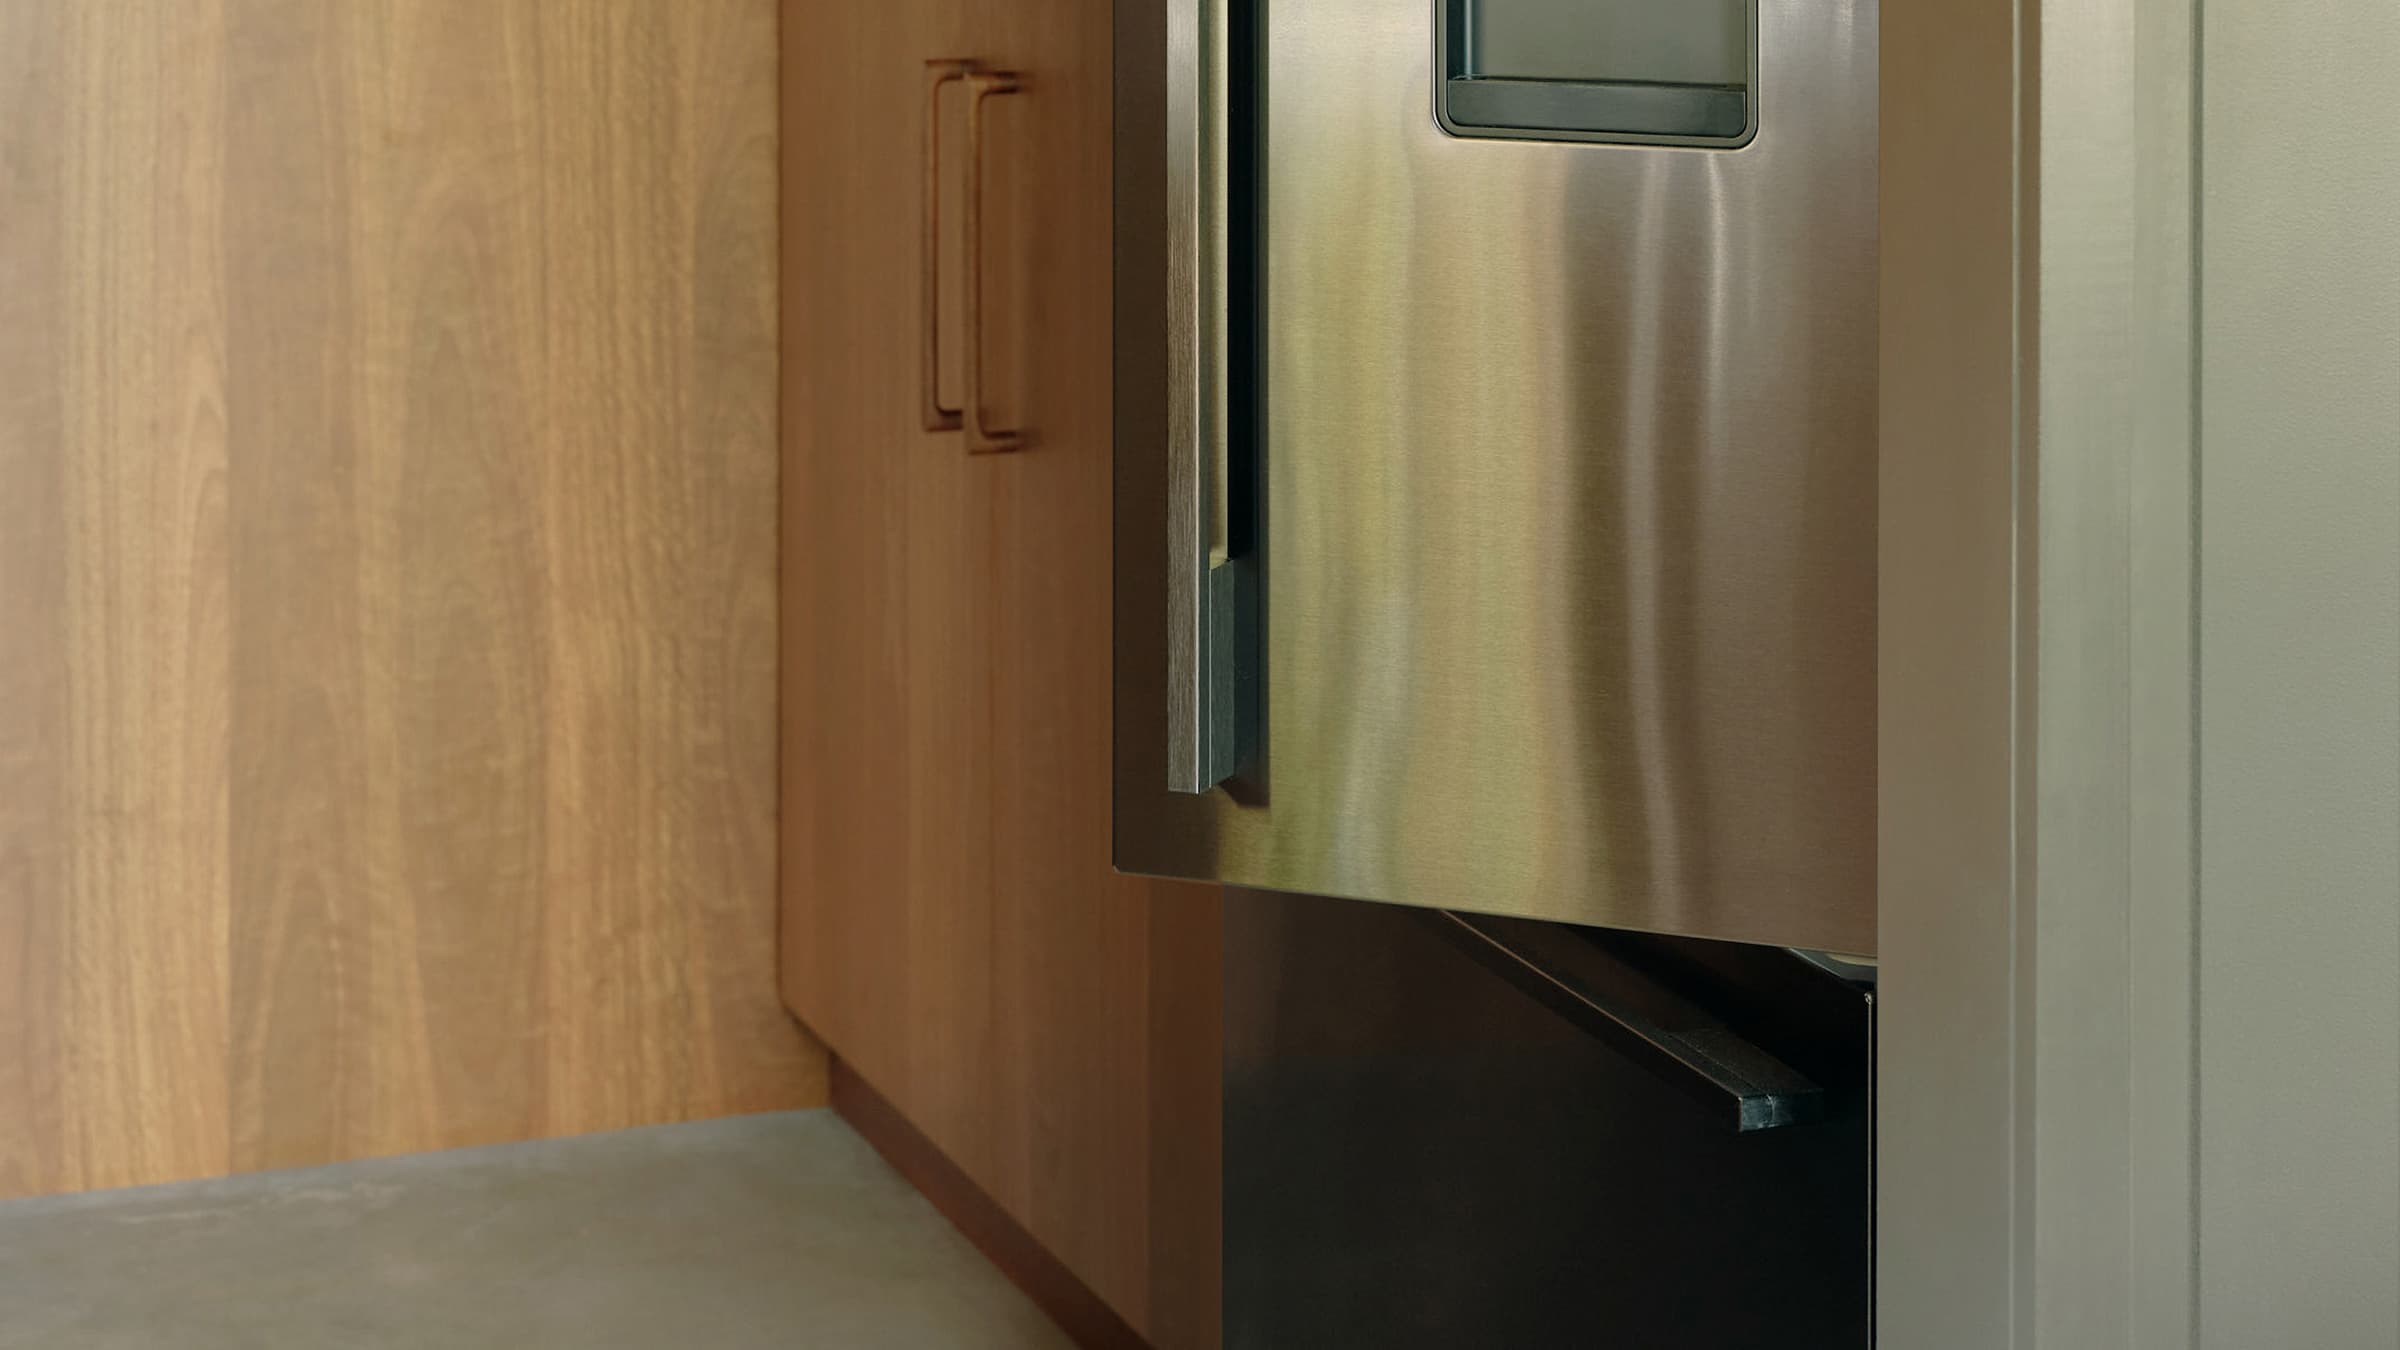 Shot of the contemporary French Door Refrigerator with one door open